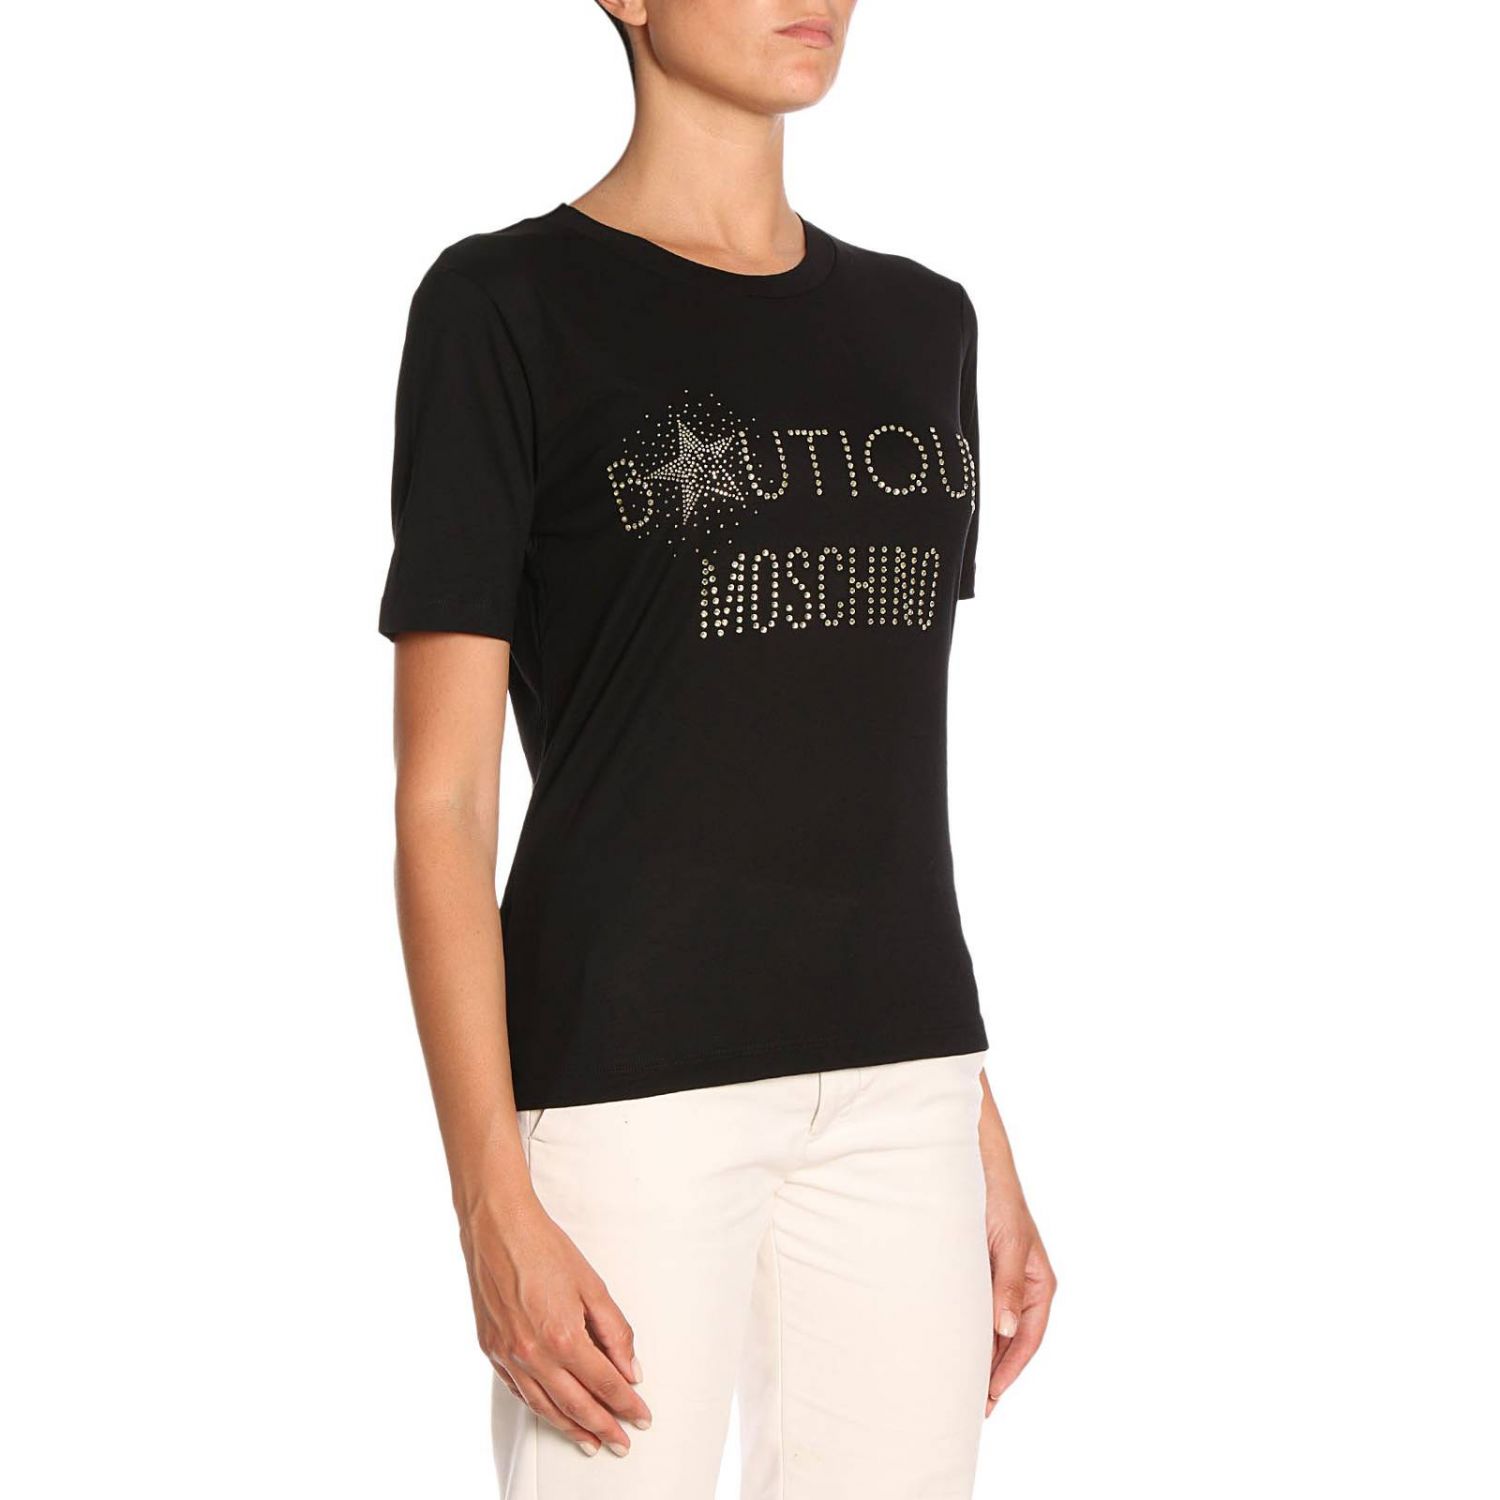 Boutique Moschino Outlet: T-shirt women - Black | T-Shirt Boutique ...